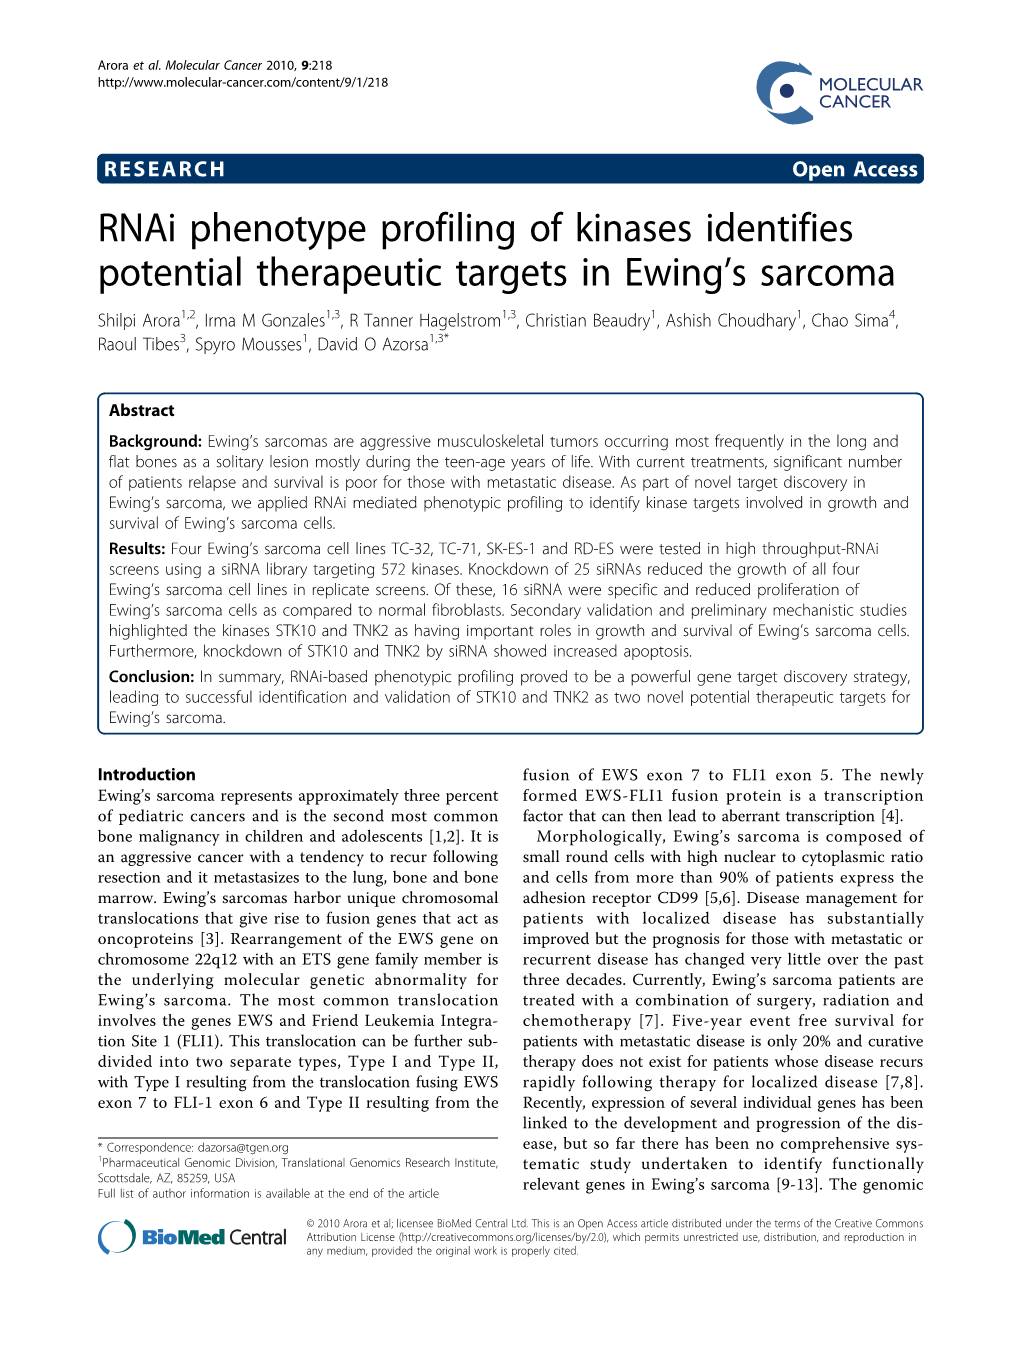 Rnai Phenotype Profiling of Kinases Identifies Potential Therapeutic